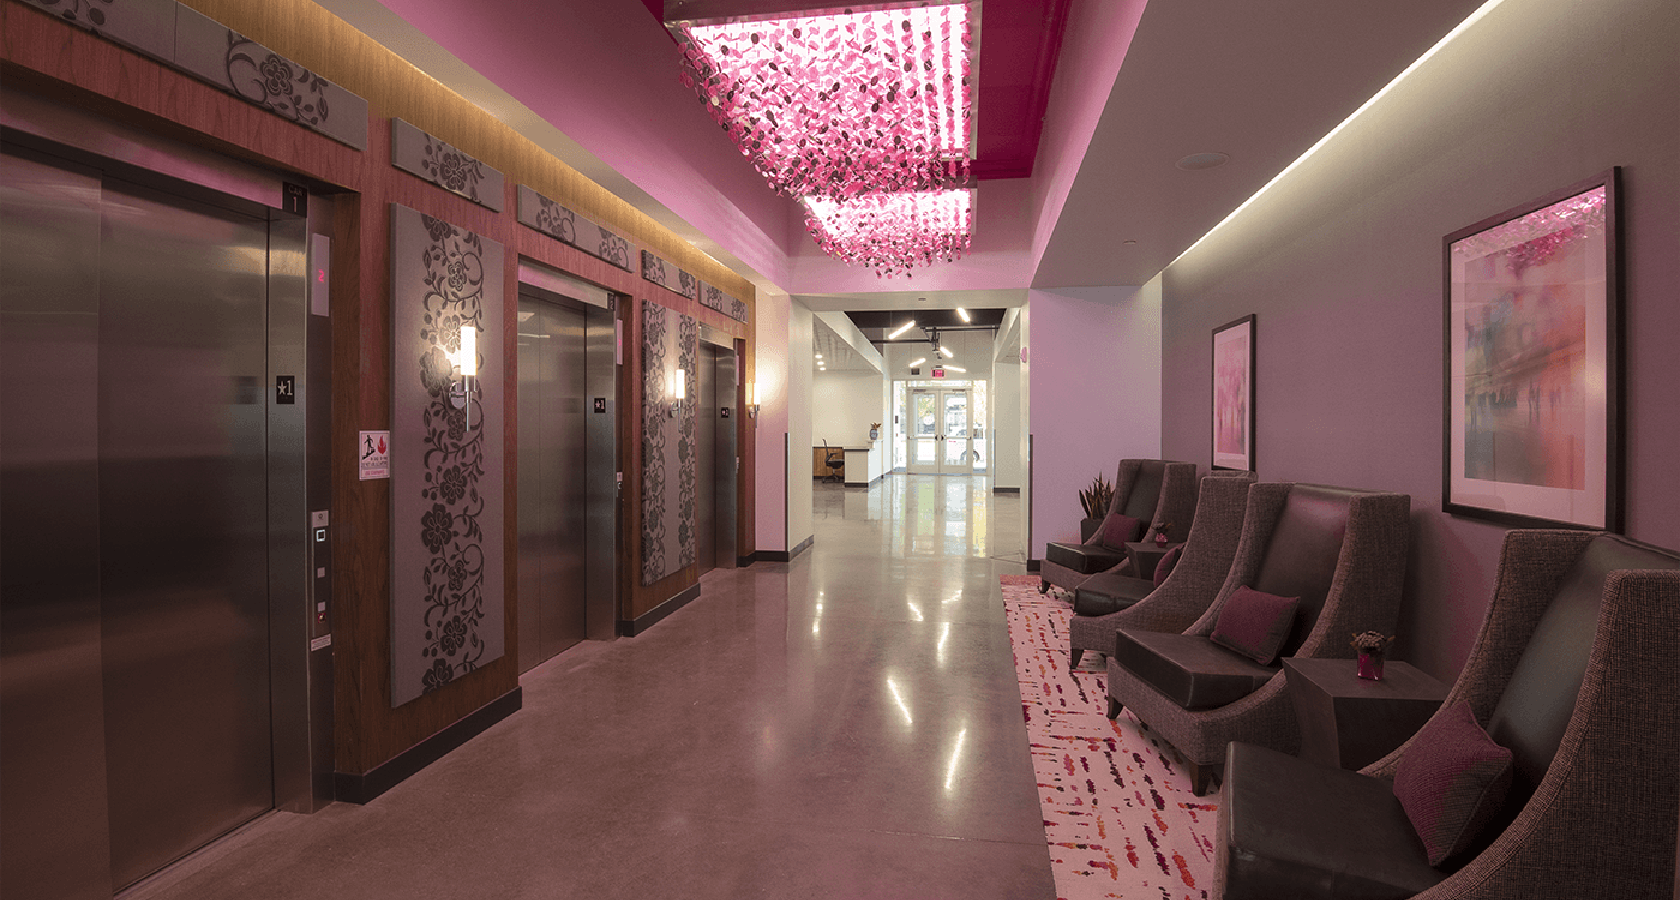 hallway with pink lighting and elevators